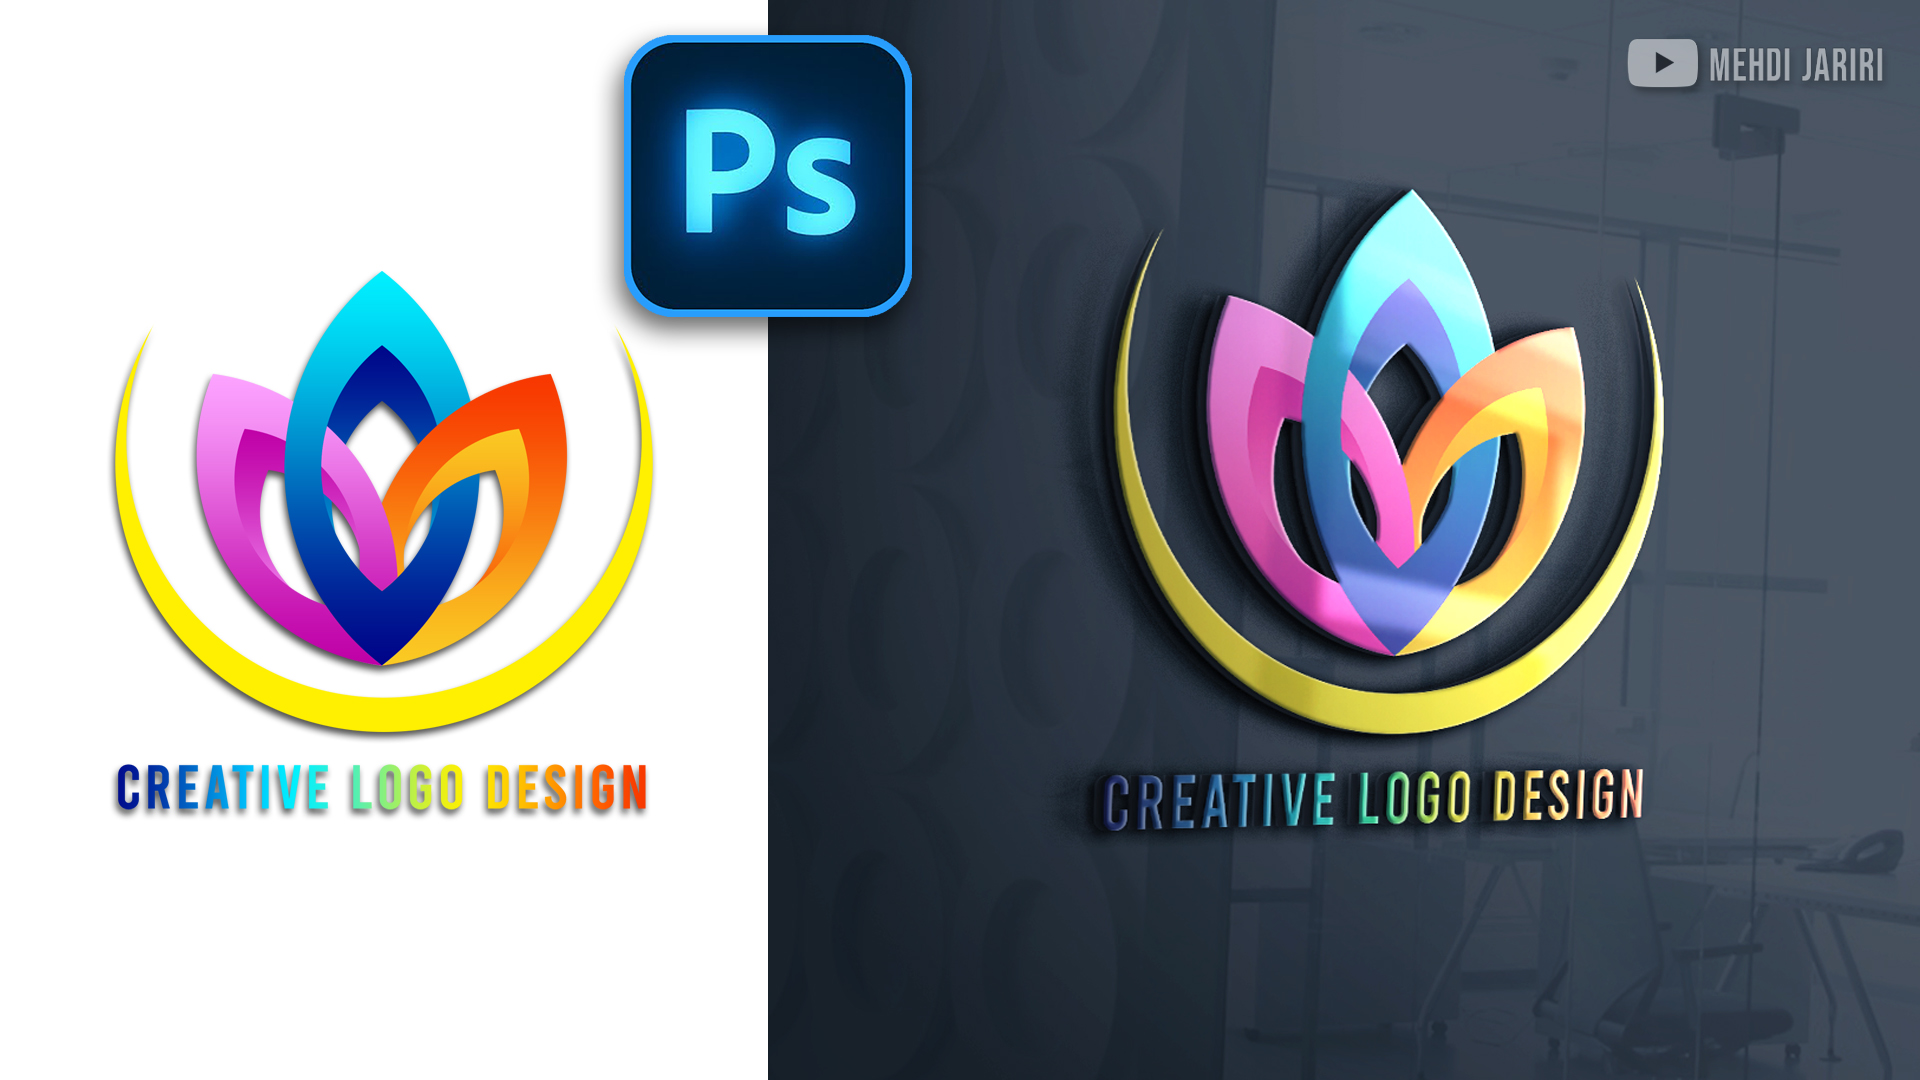 تصميم لوجو احترافي بالفوتوشوب | Creative Logo Design in Photoshop